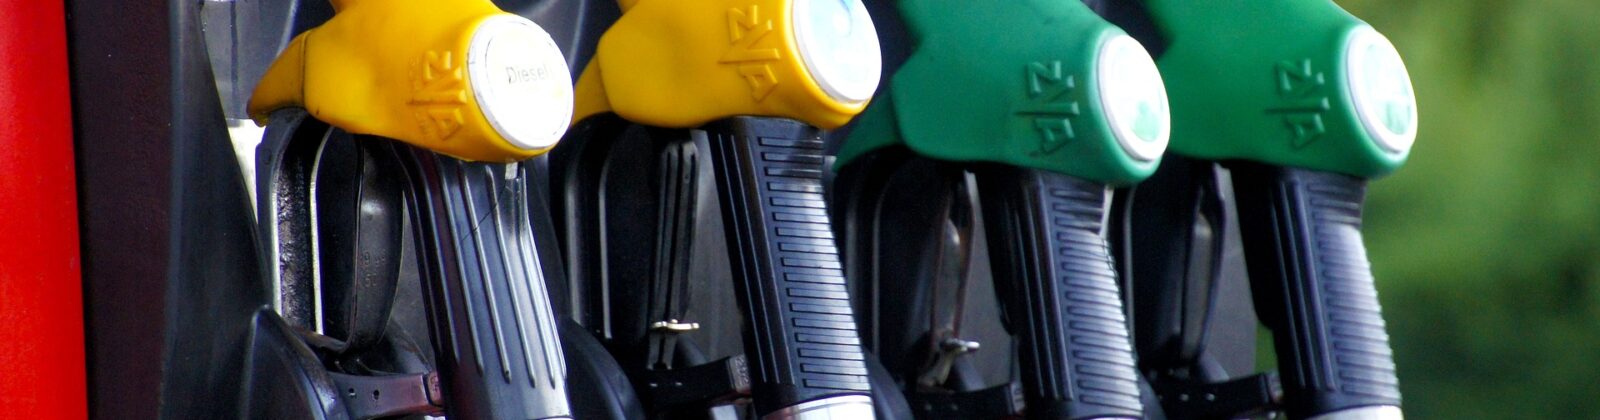 tankstation benzine en diesel